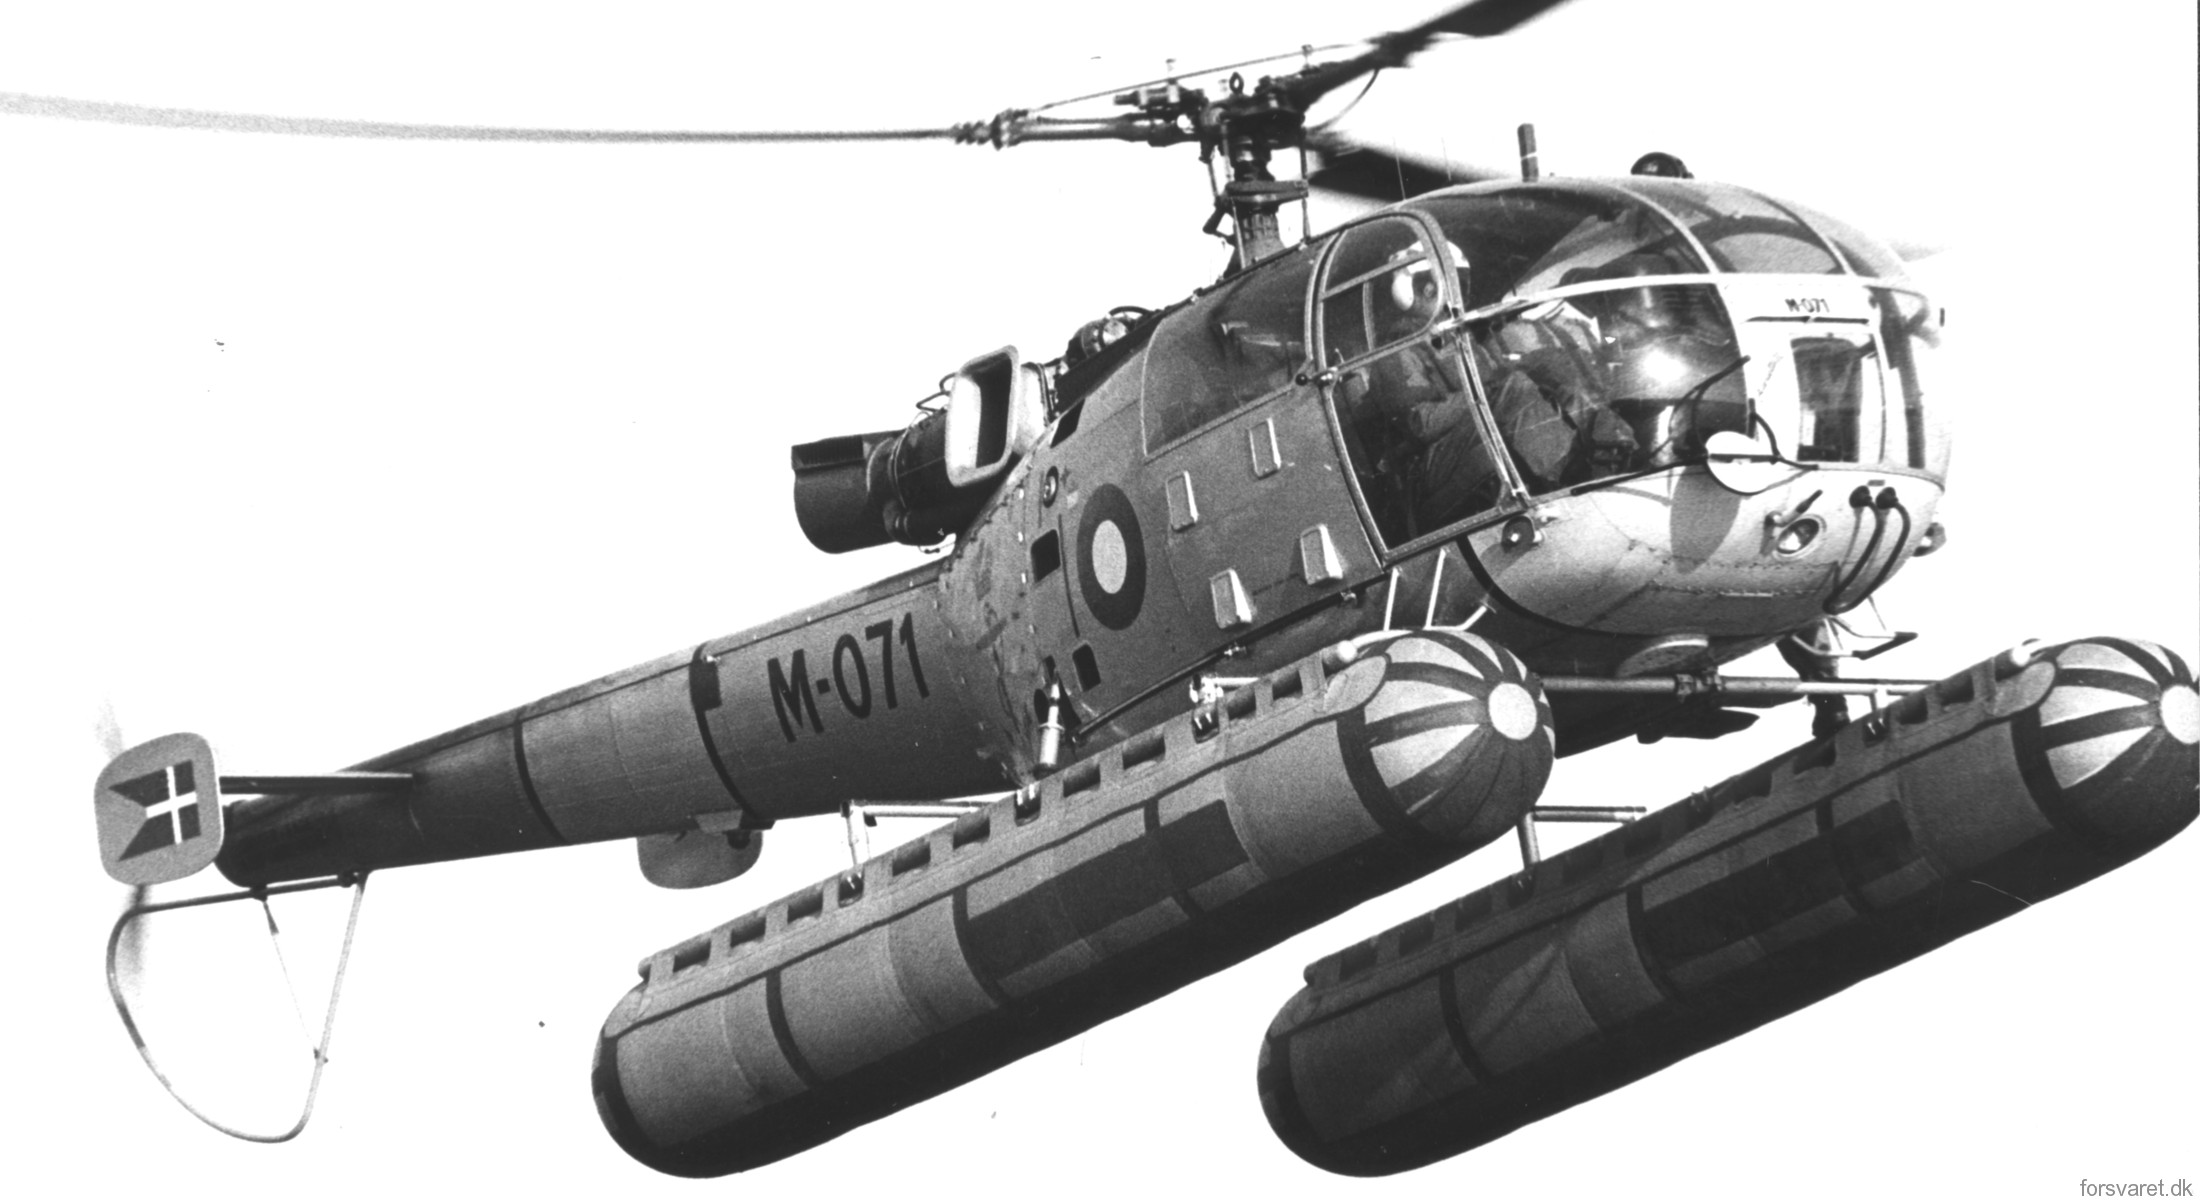 sa 316b alouette iii helicopter royal danish navy søværnet kongelige danske marine sud aviation m-071 22